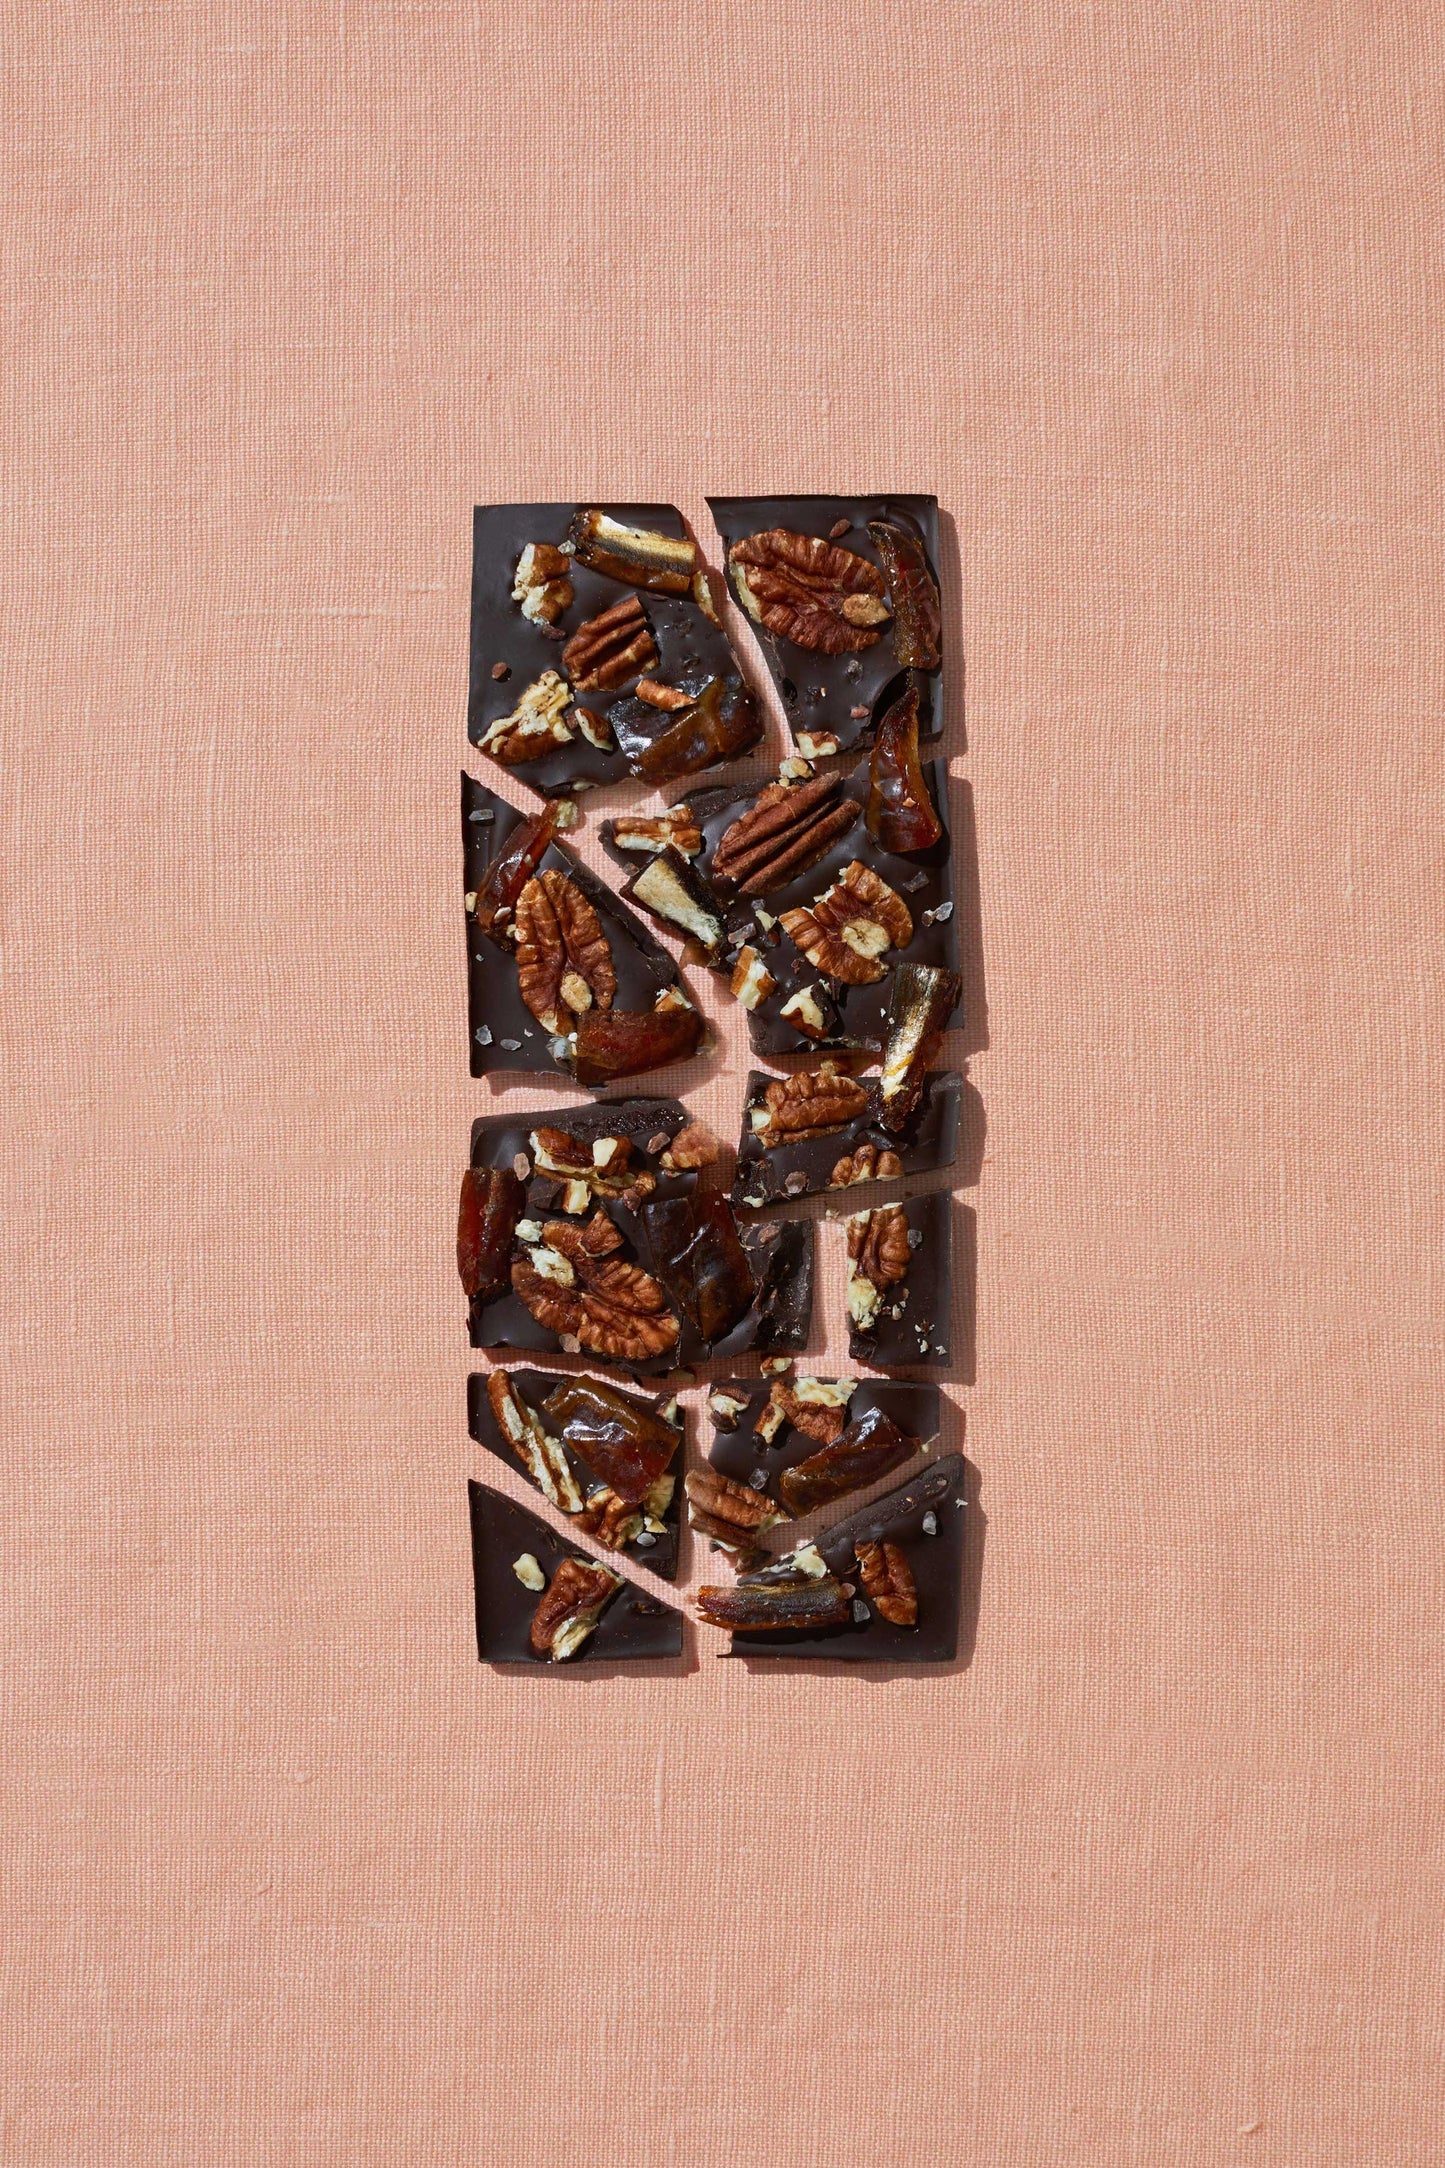 spring & mulberry / date-sweetened chocolate - medjool date, pecan, himalayan salt